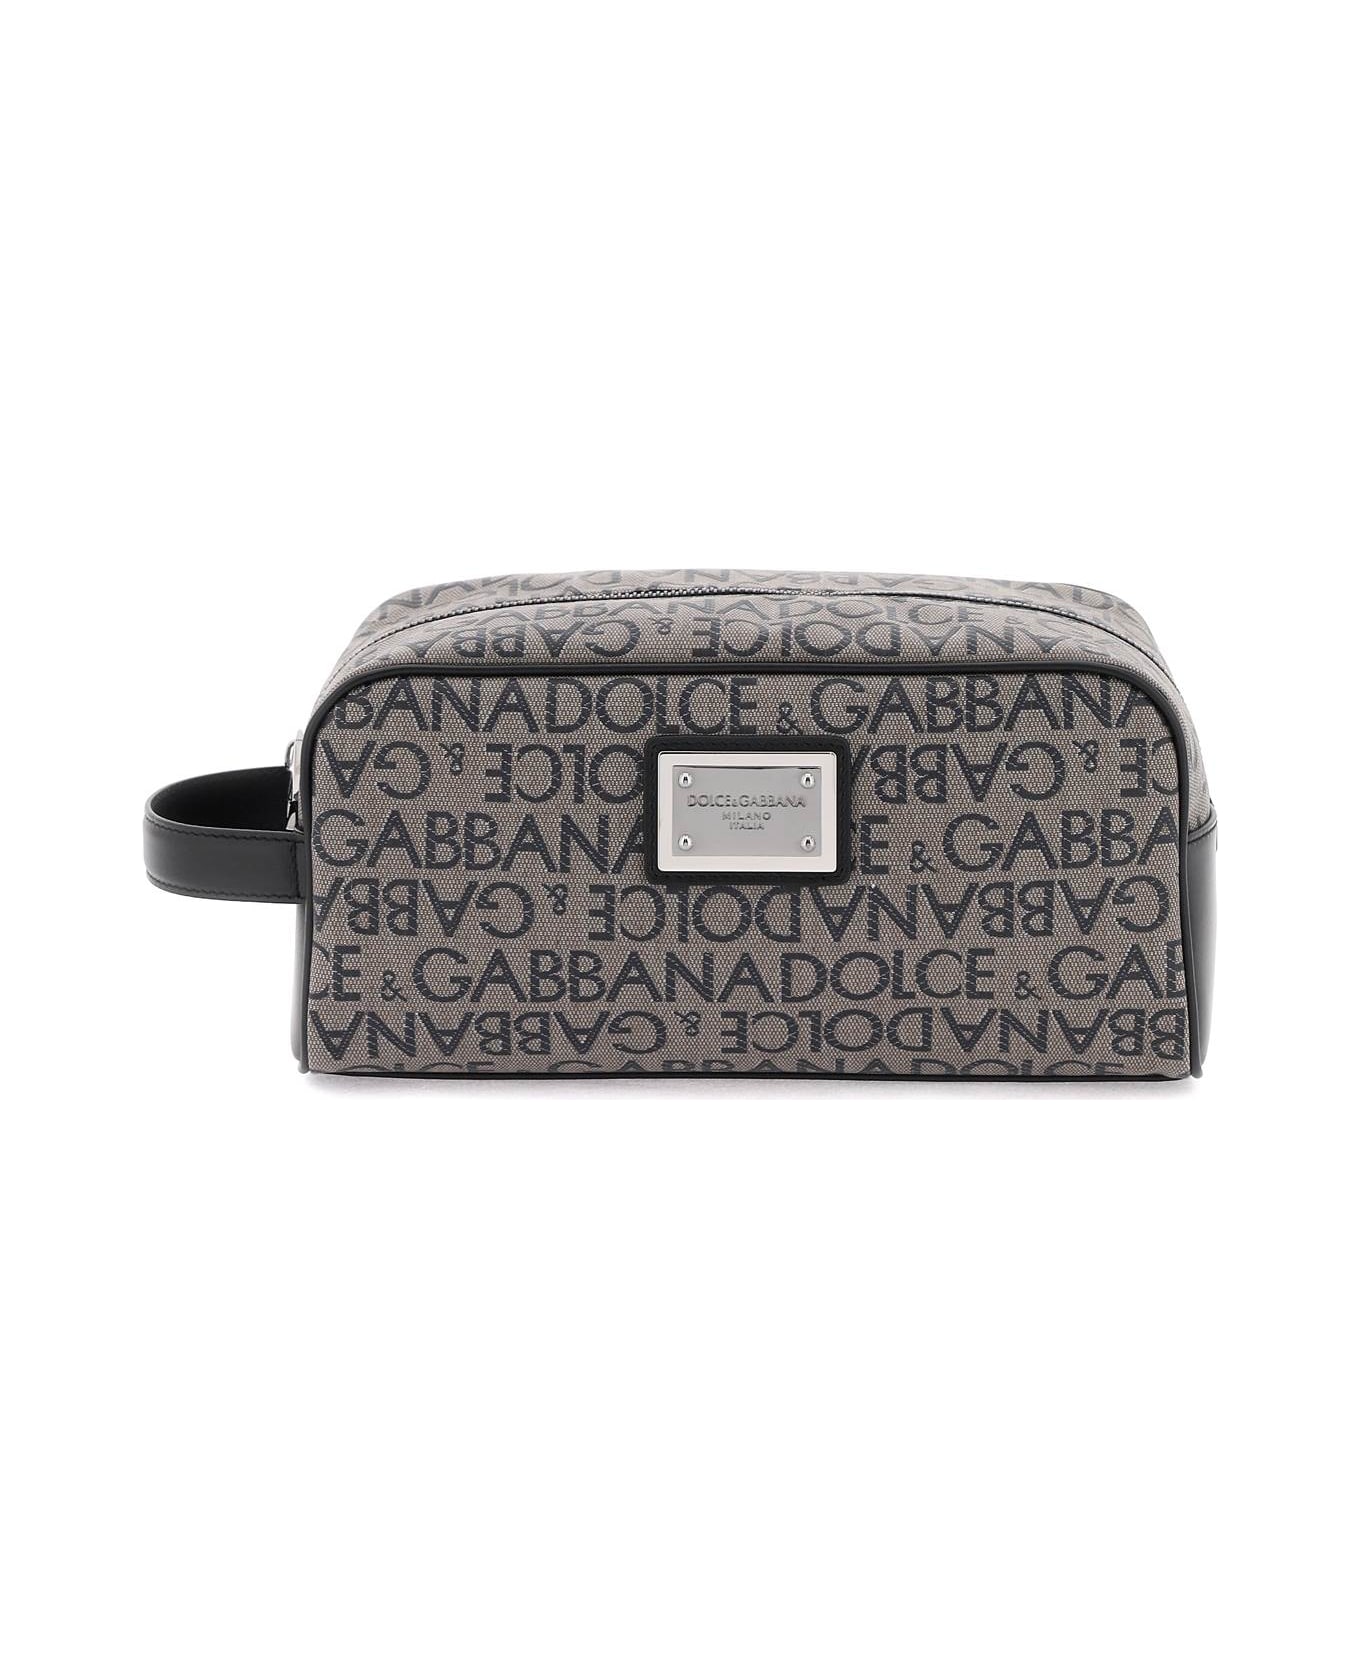 Dolce & Gabbana Vanity Case - MARRONE NERO (Brown) トラベルバッグ